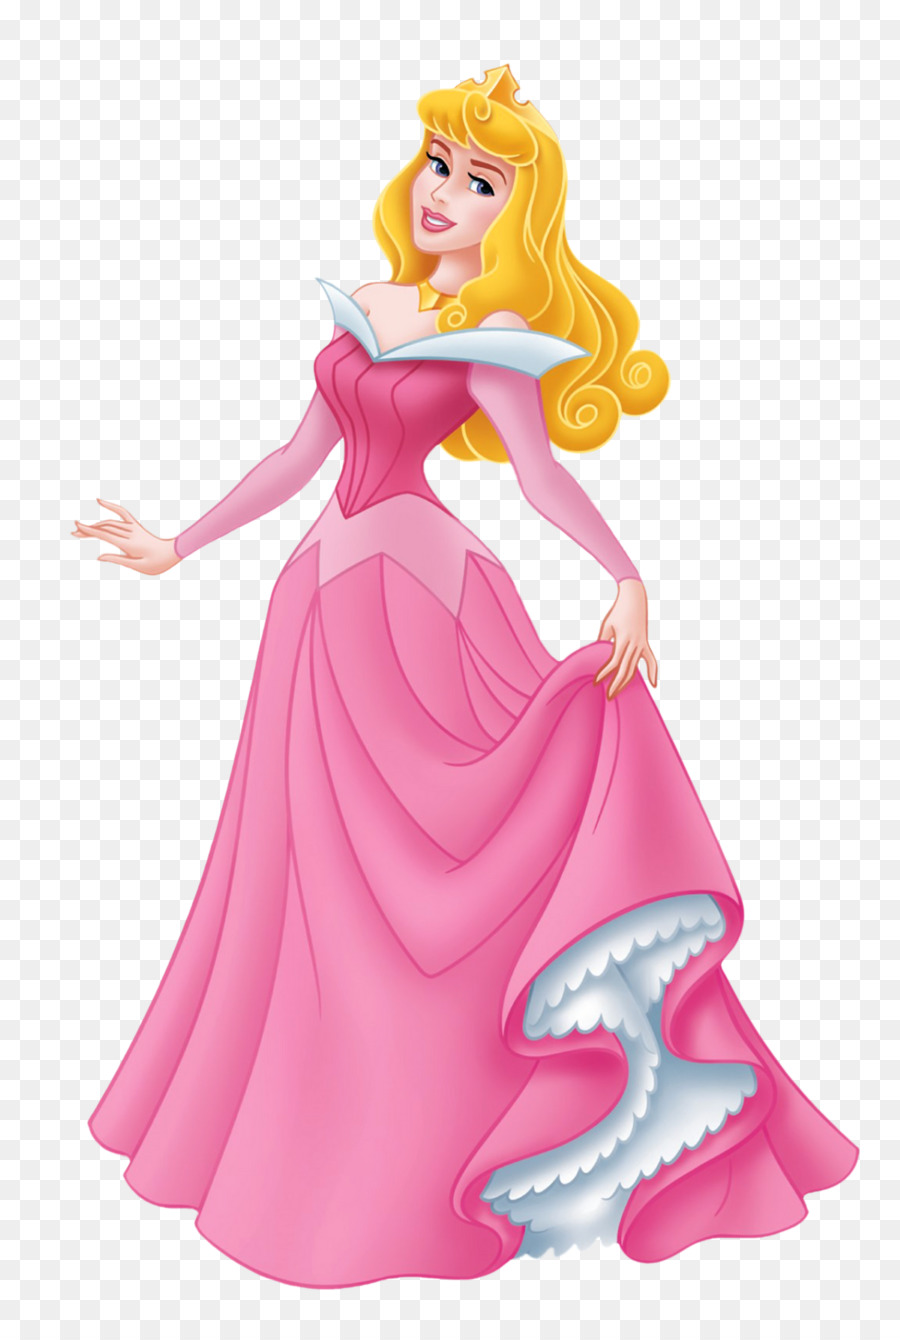 Princess Aurora Prince Phillip The Walt Disney Company Clip art - Princess PNG Transparent png download - 1055*1565 - Free Transparent  png Download.